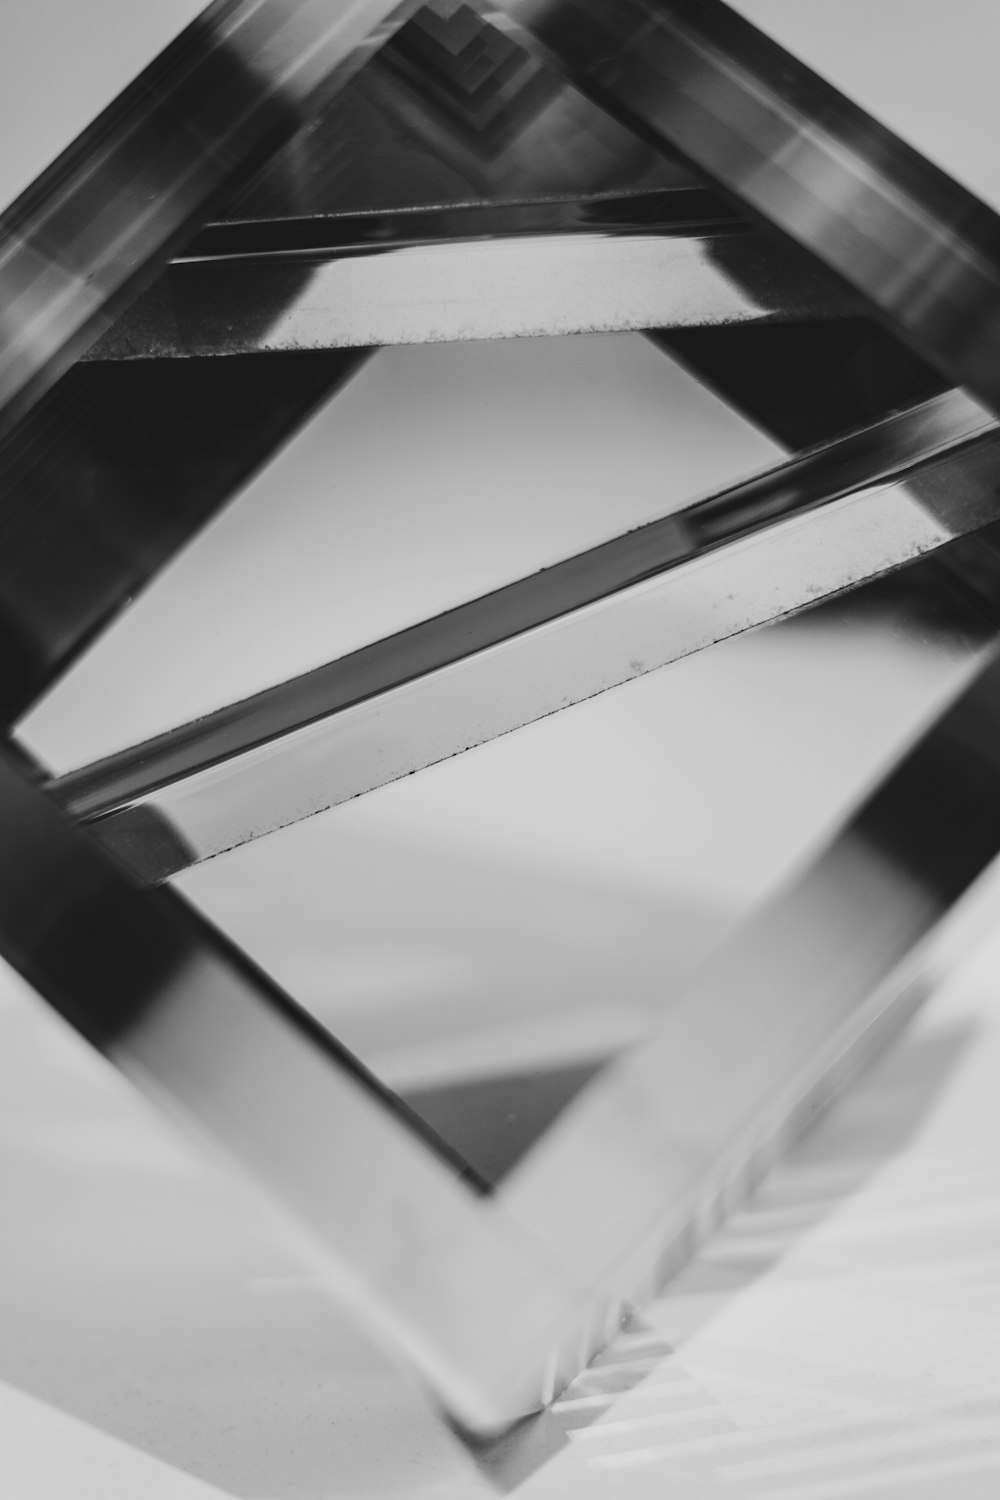 a black and white photo of a diamond